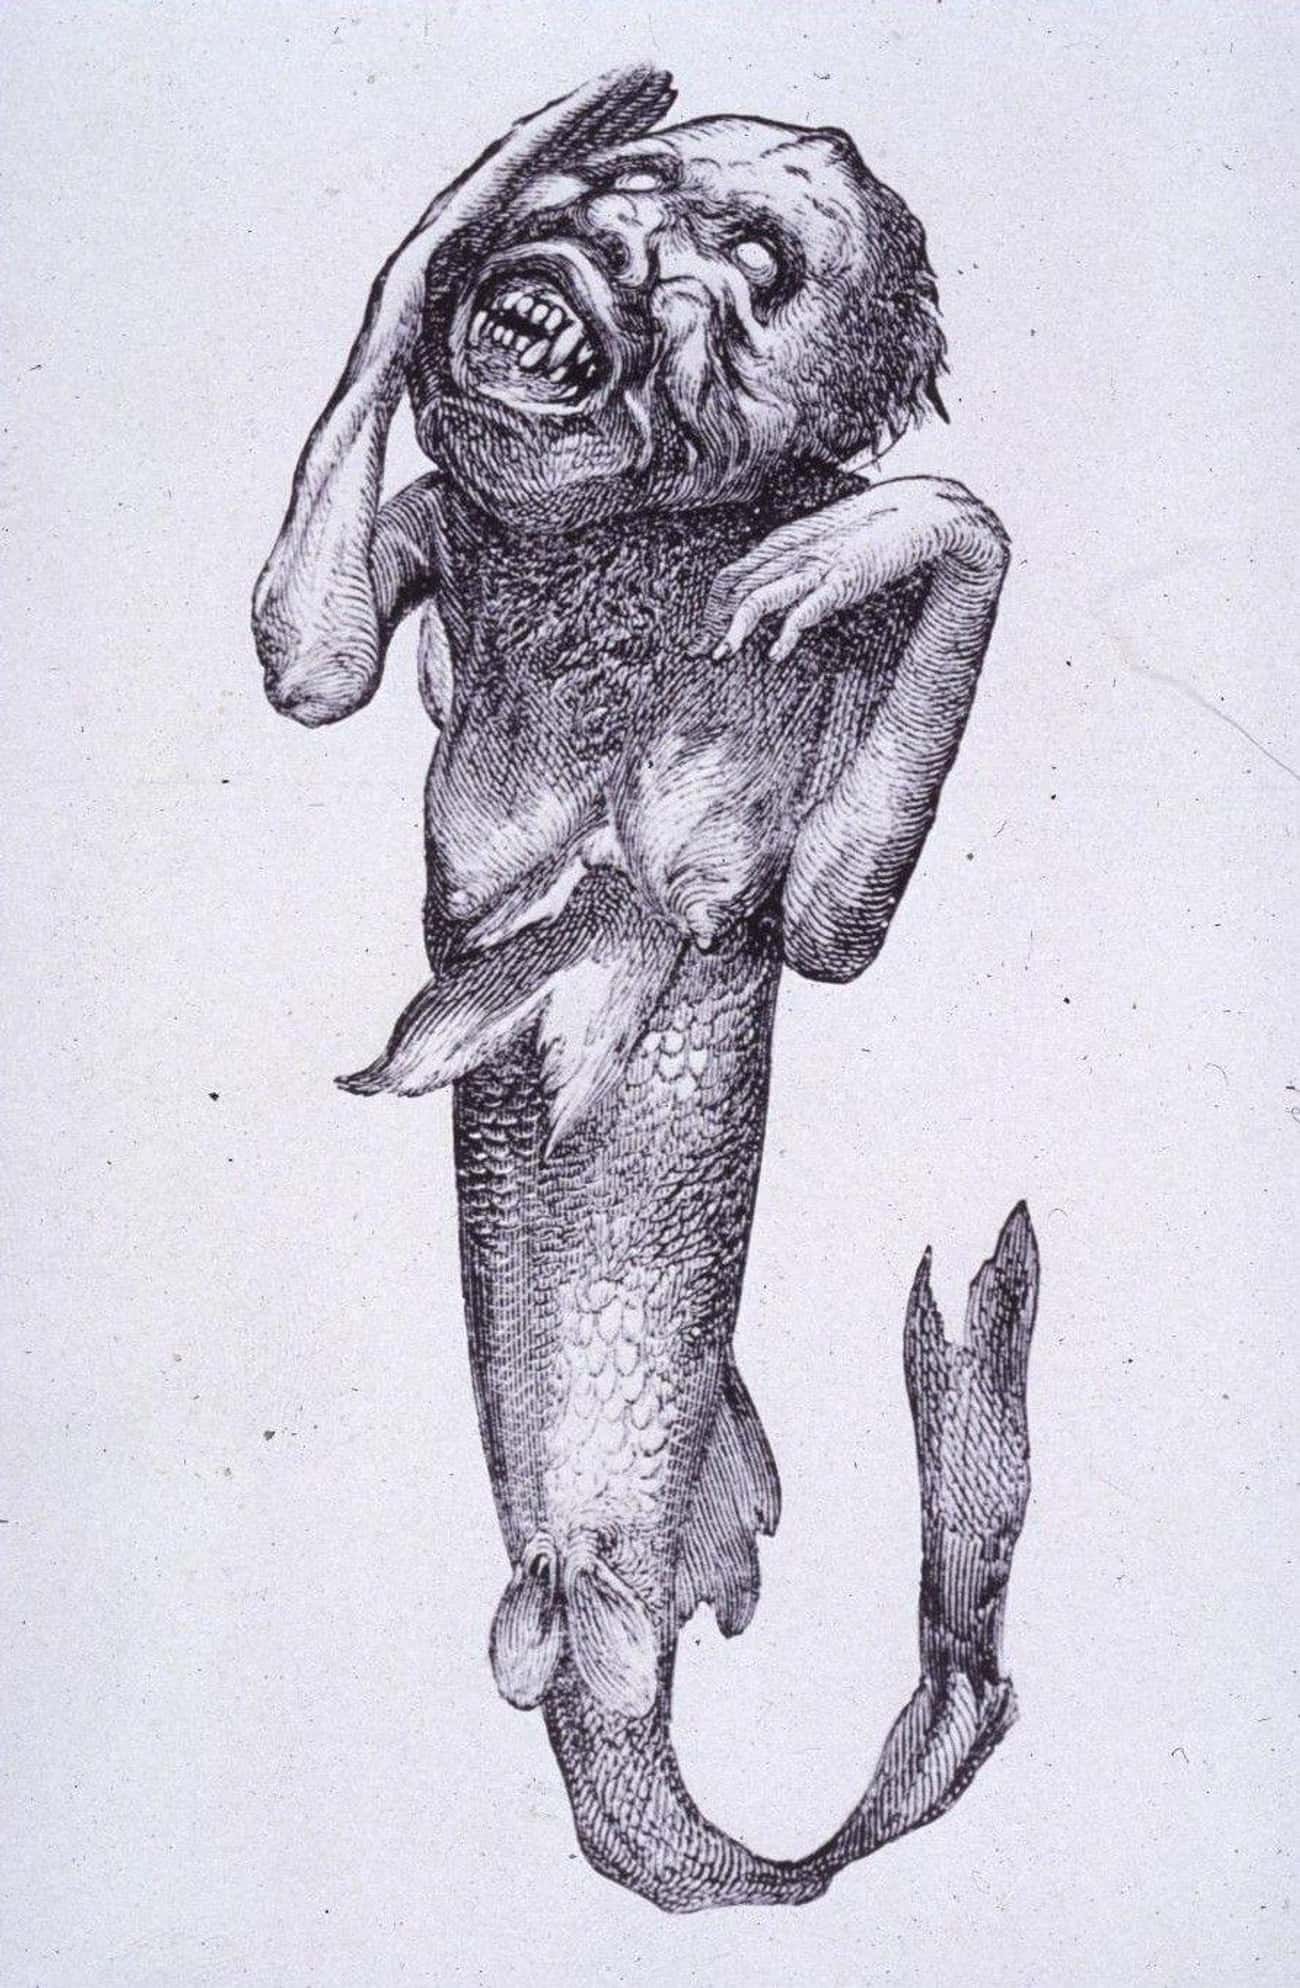 His Feejee Mermaid Was Actually Half Orangutan, Half Fish